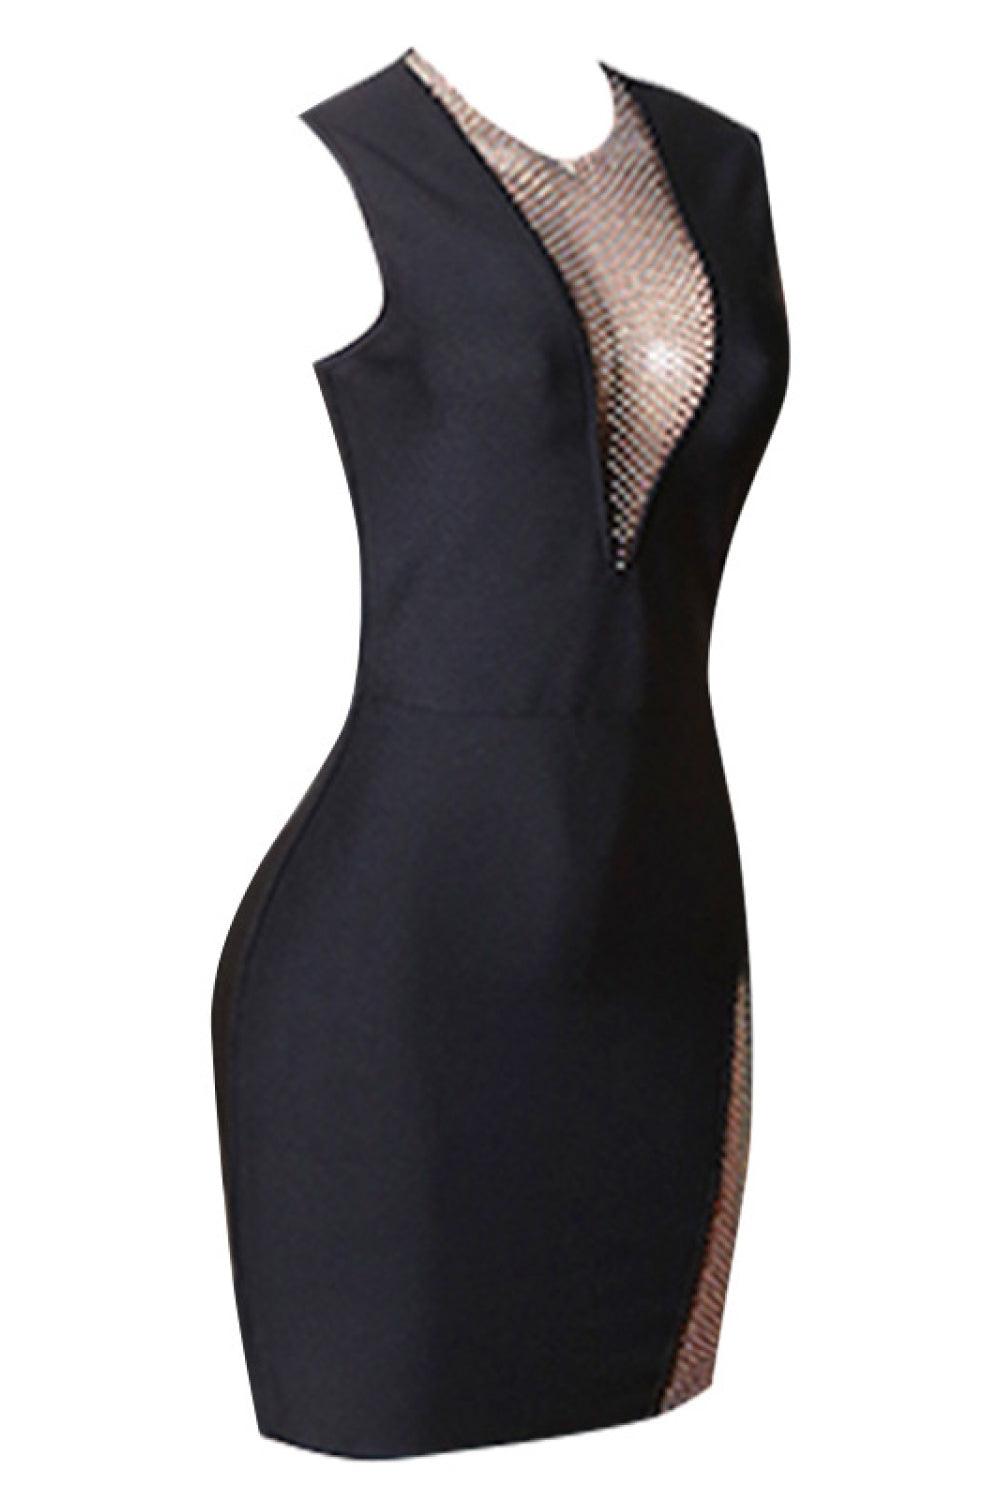 Rhinestone Detail Spliced Mesh Sleeveless Dress - Lucianne Boutique